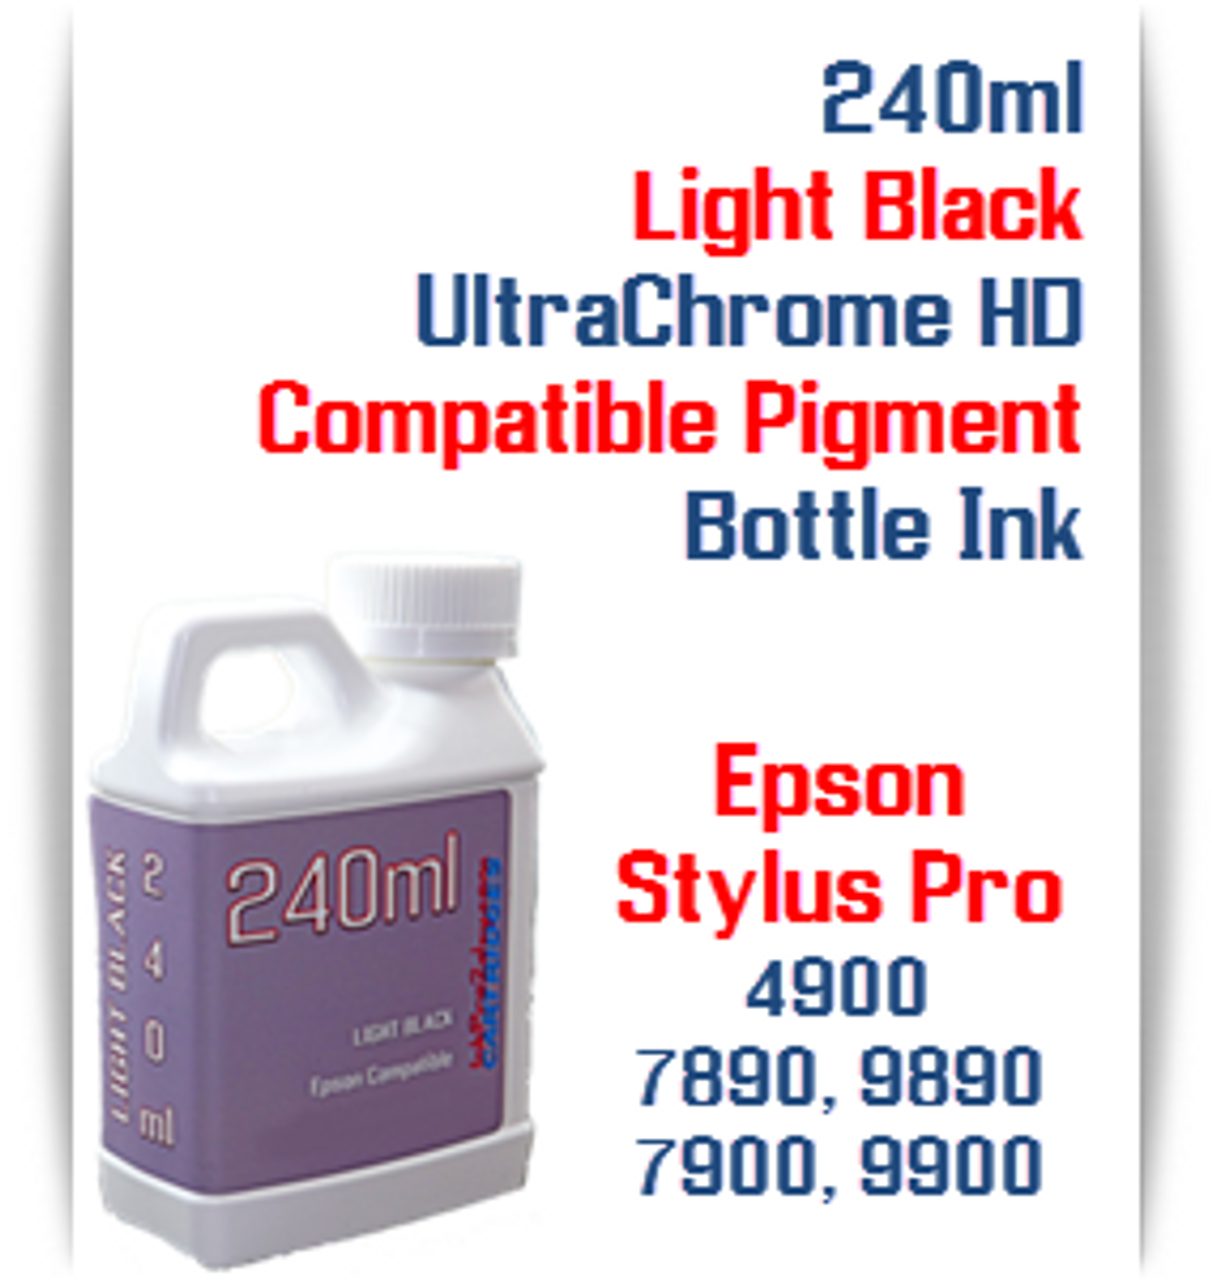 Light Black 240ml Bottle Compatible UltraChrome HDR Pigment Ink Epson Stylus Pro 4900, 7700, 9700, 7890, 9890, 7900, 9900 Printers